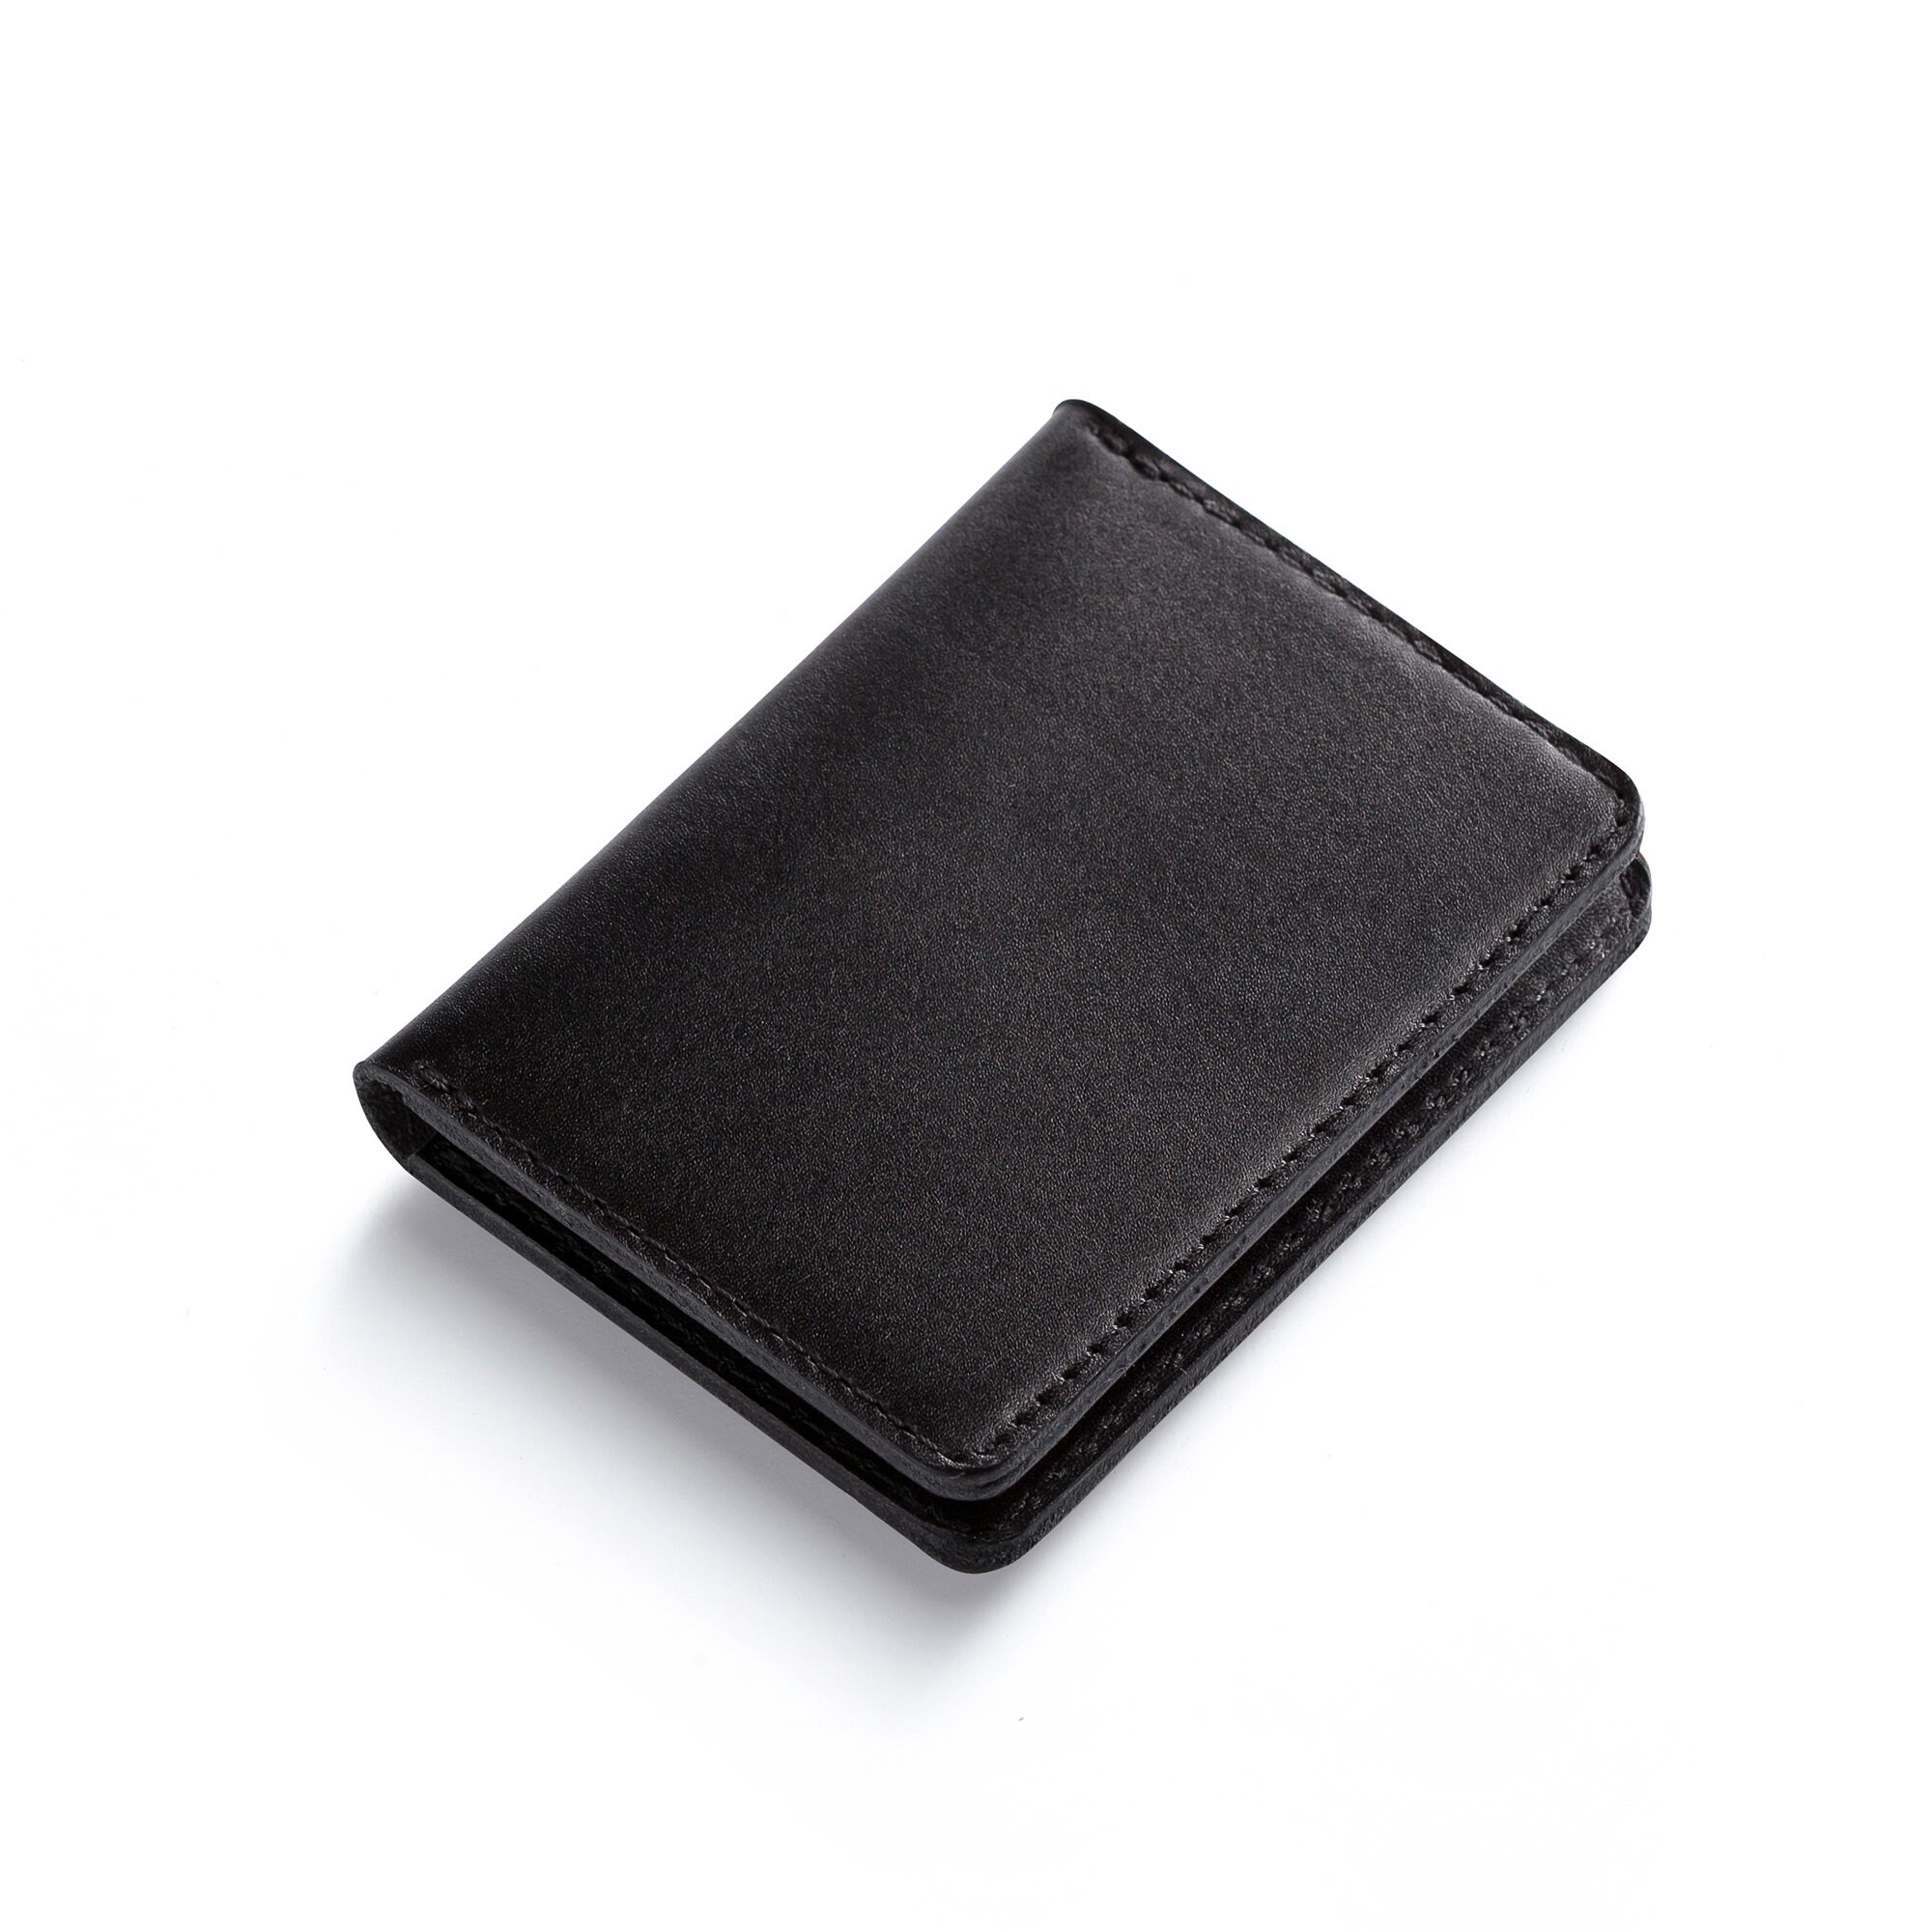 Minimalist leather wallet leather bifold wallet leather slim | Etsy